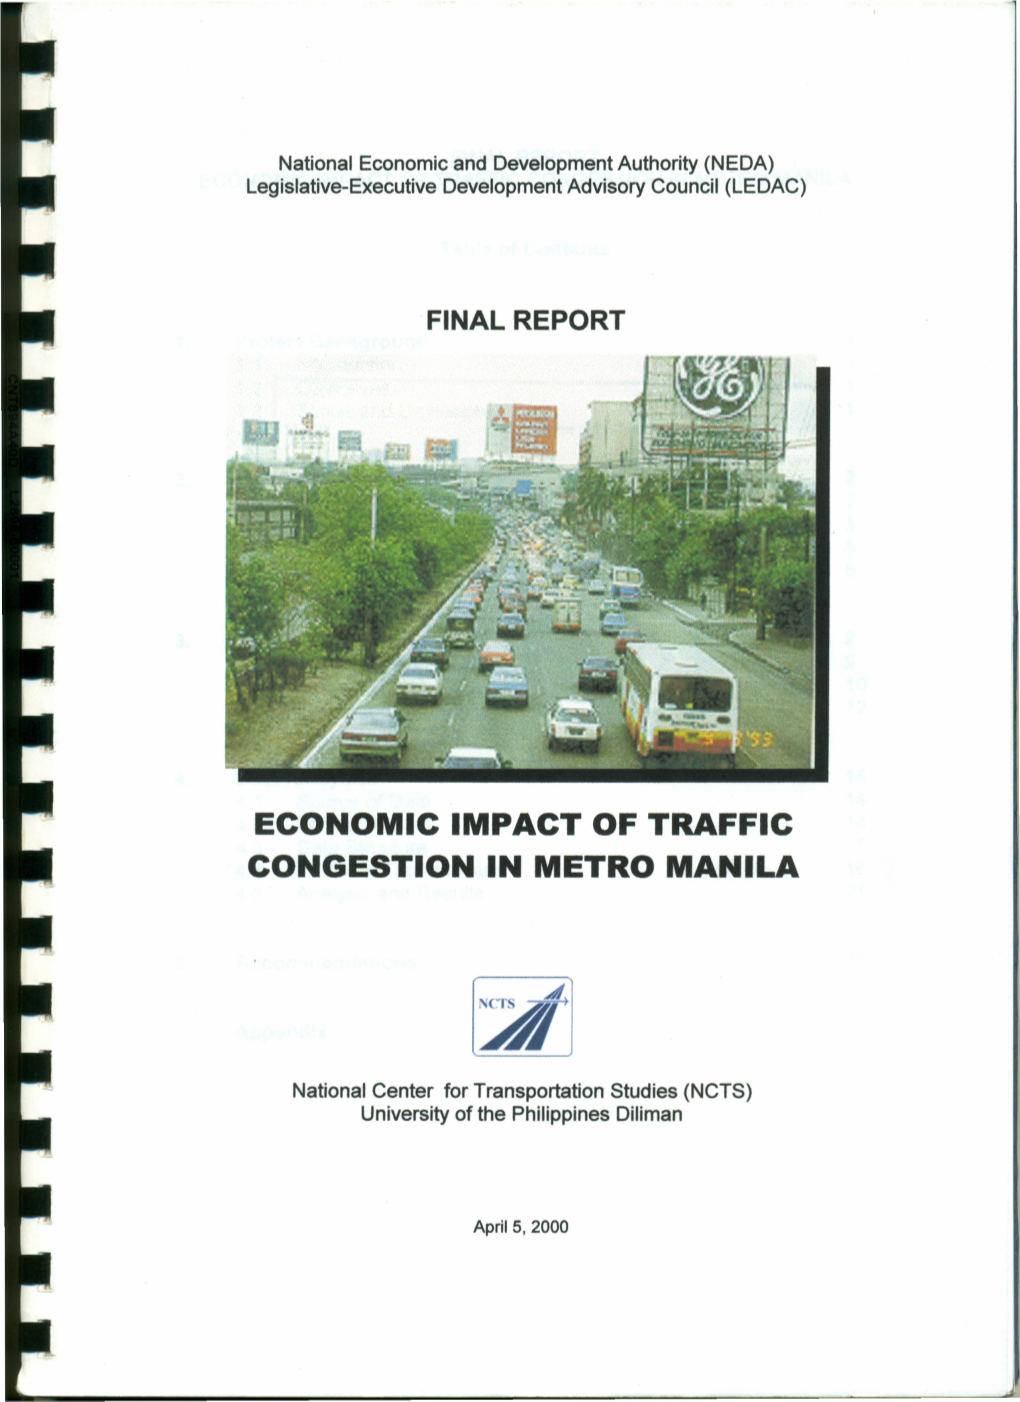 Economic Impact of Traffic Congestion in Metro Manila